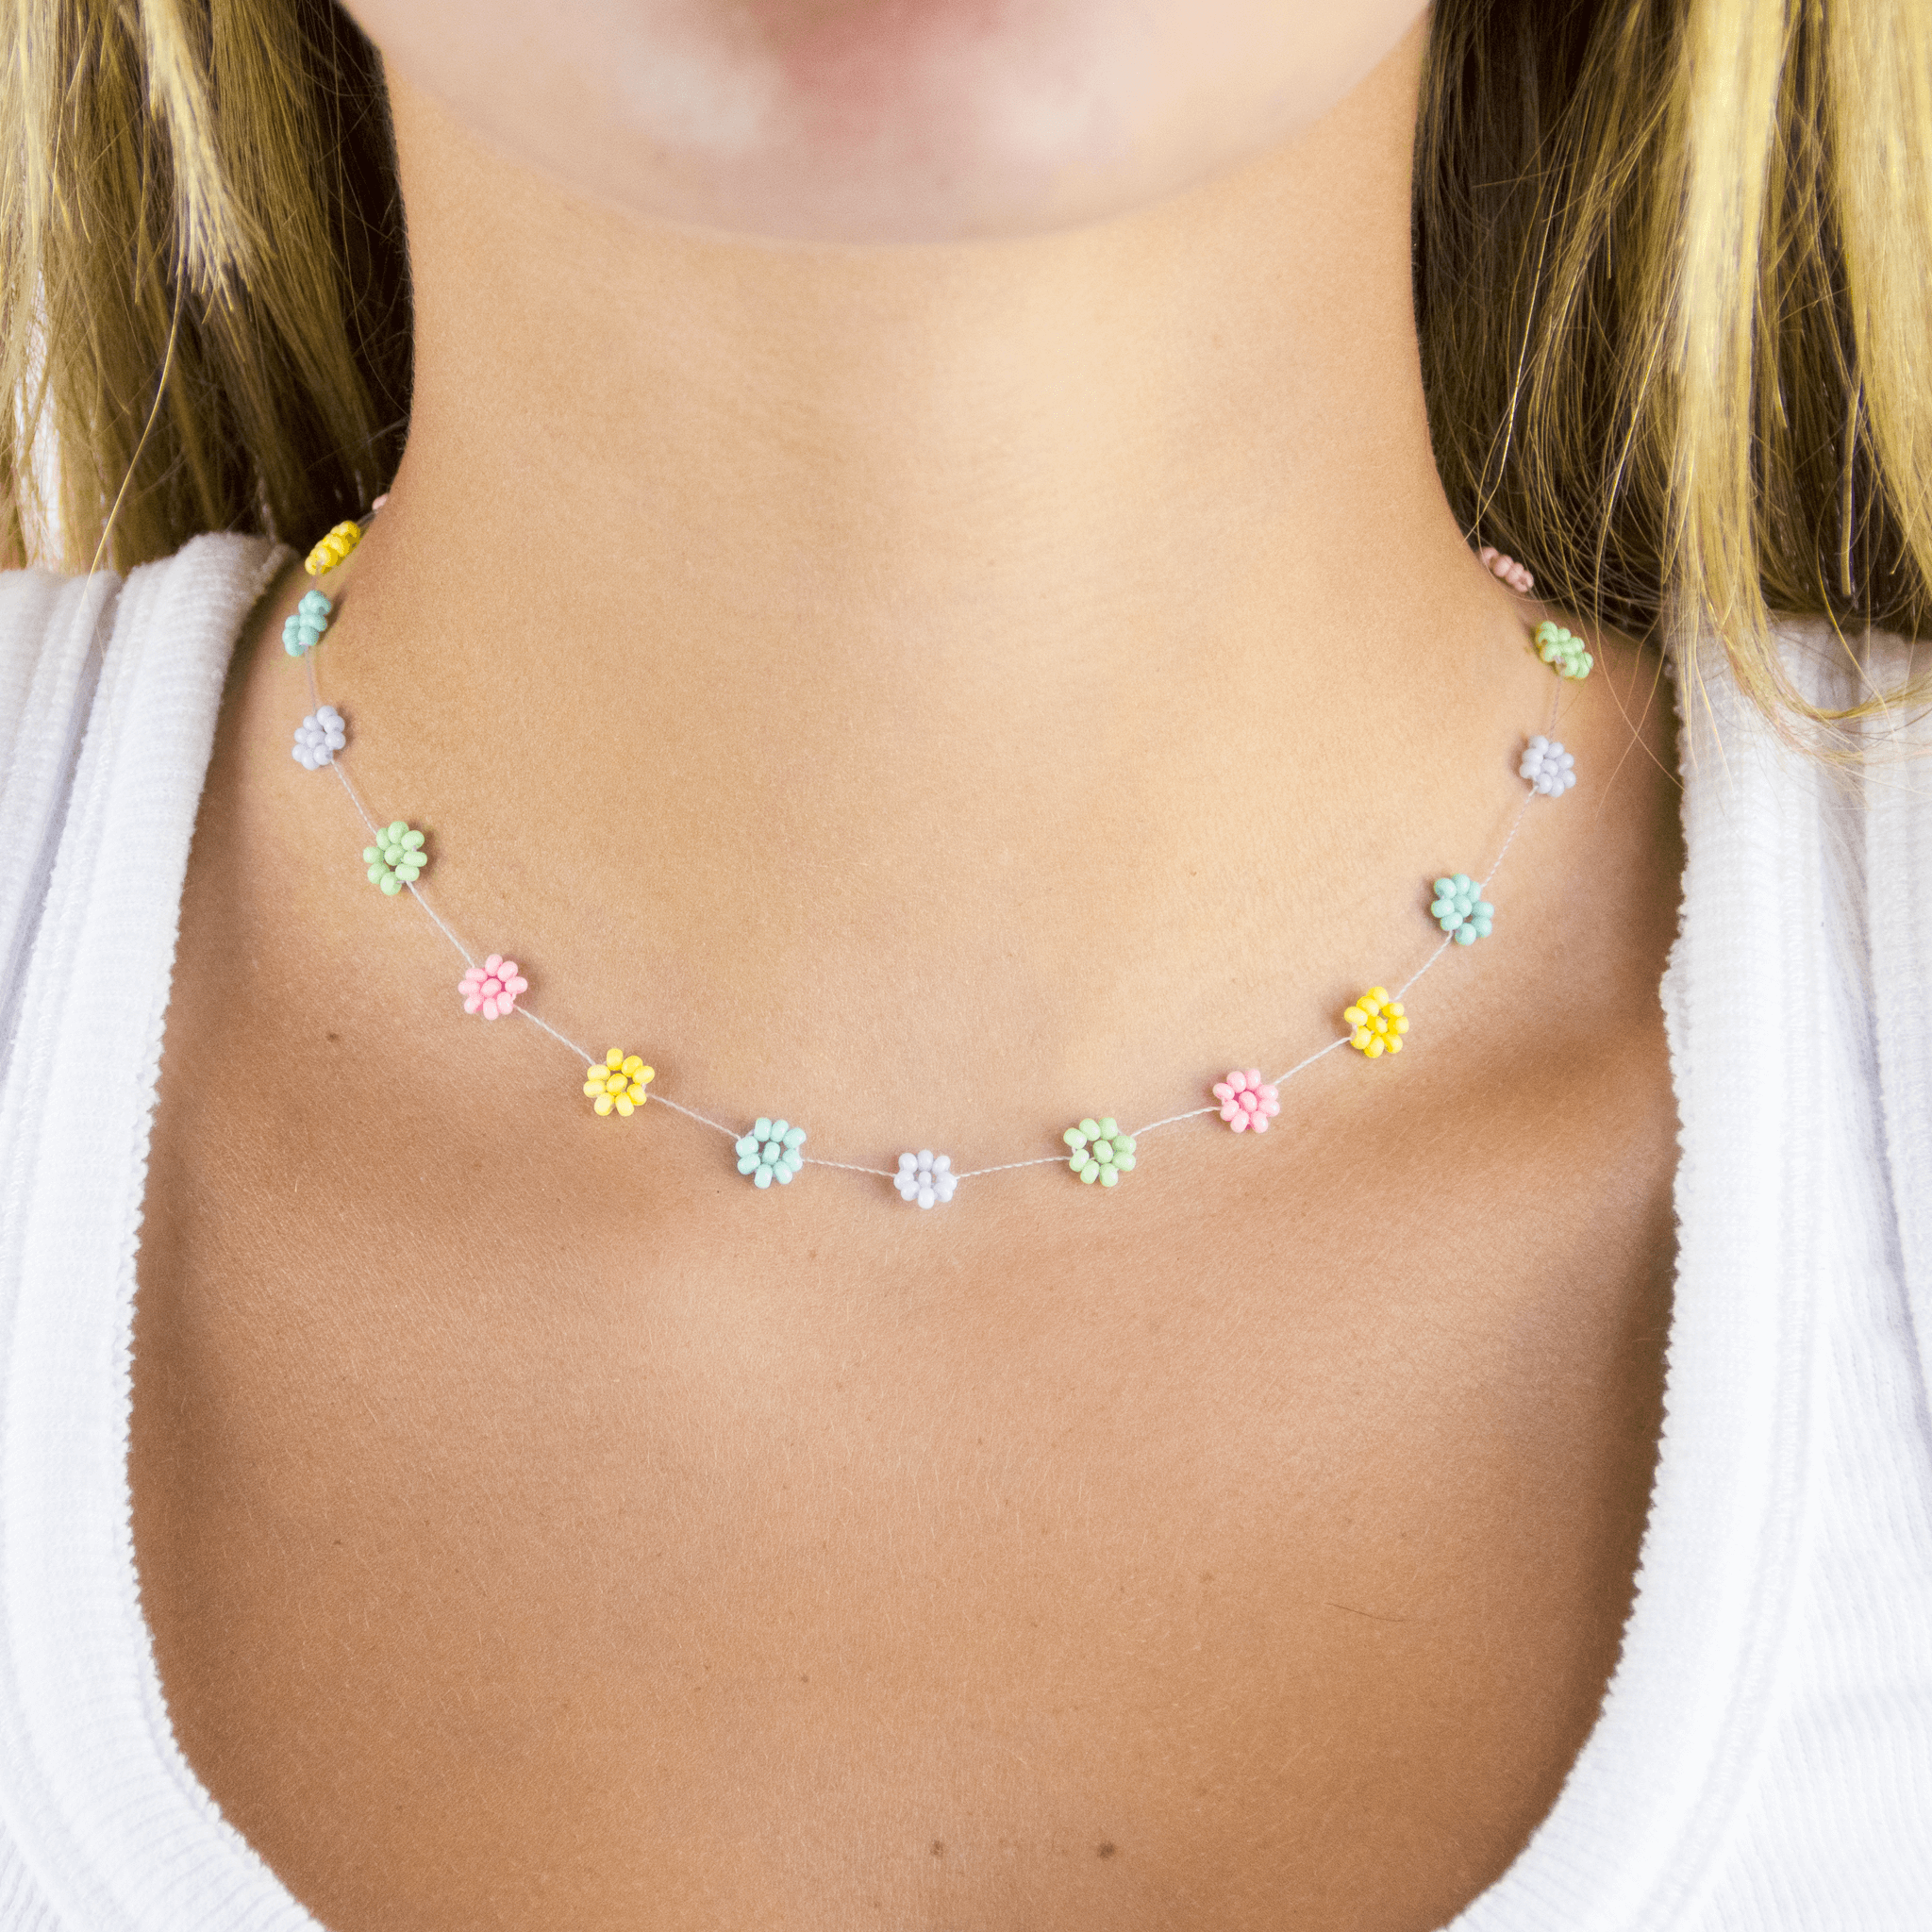 Silver daisy choker necklace